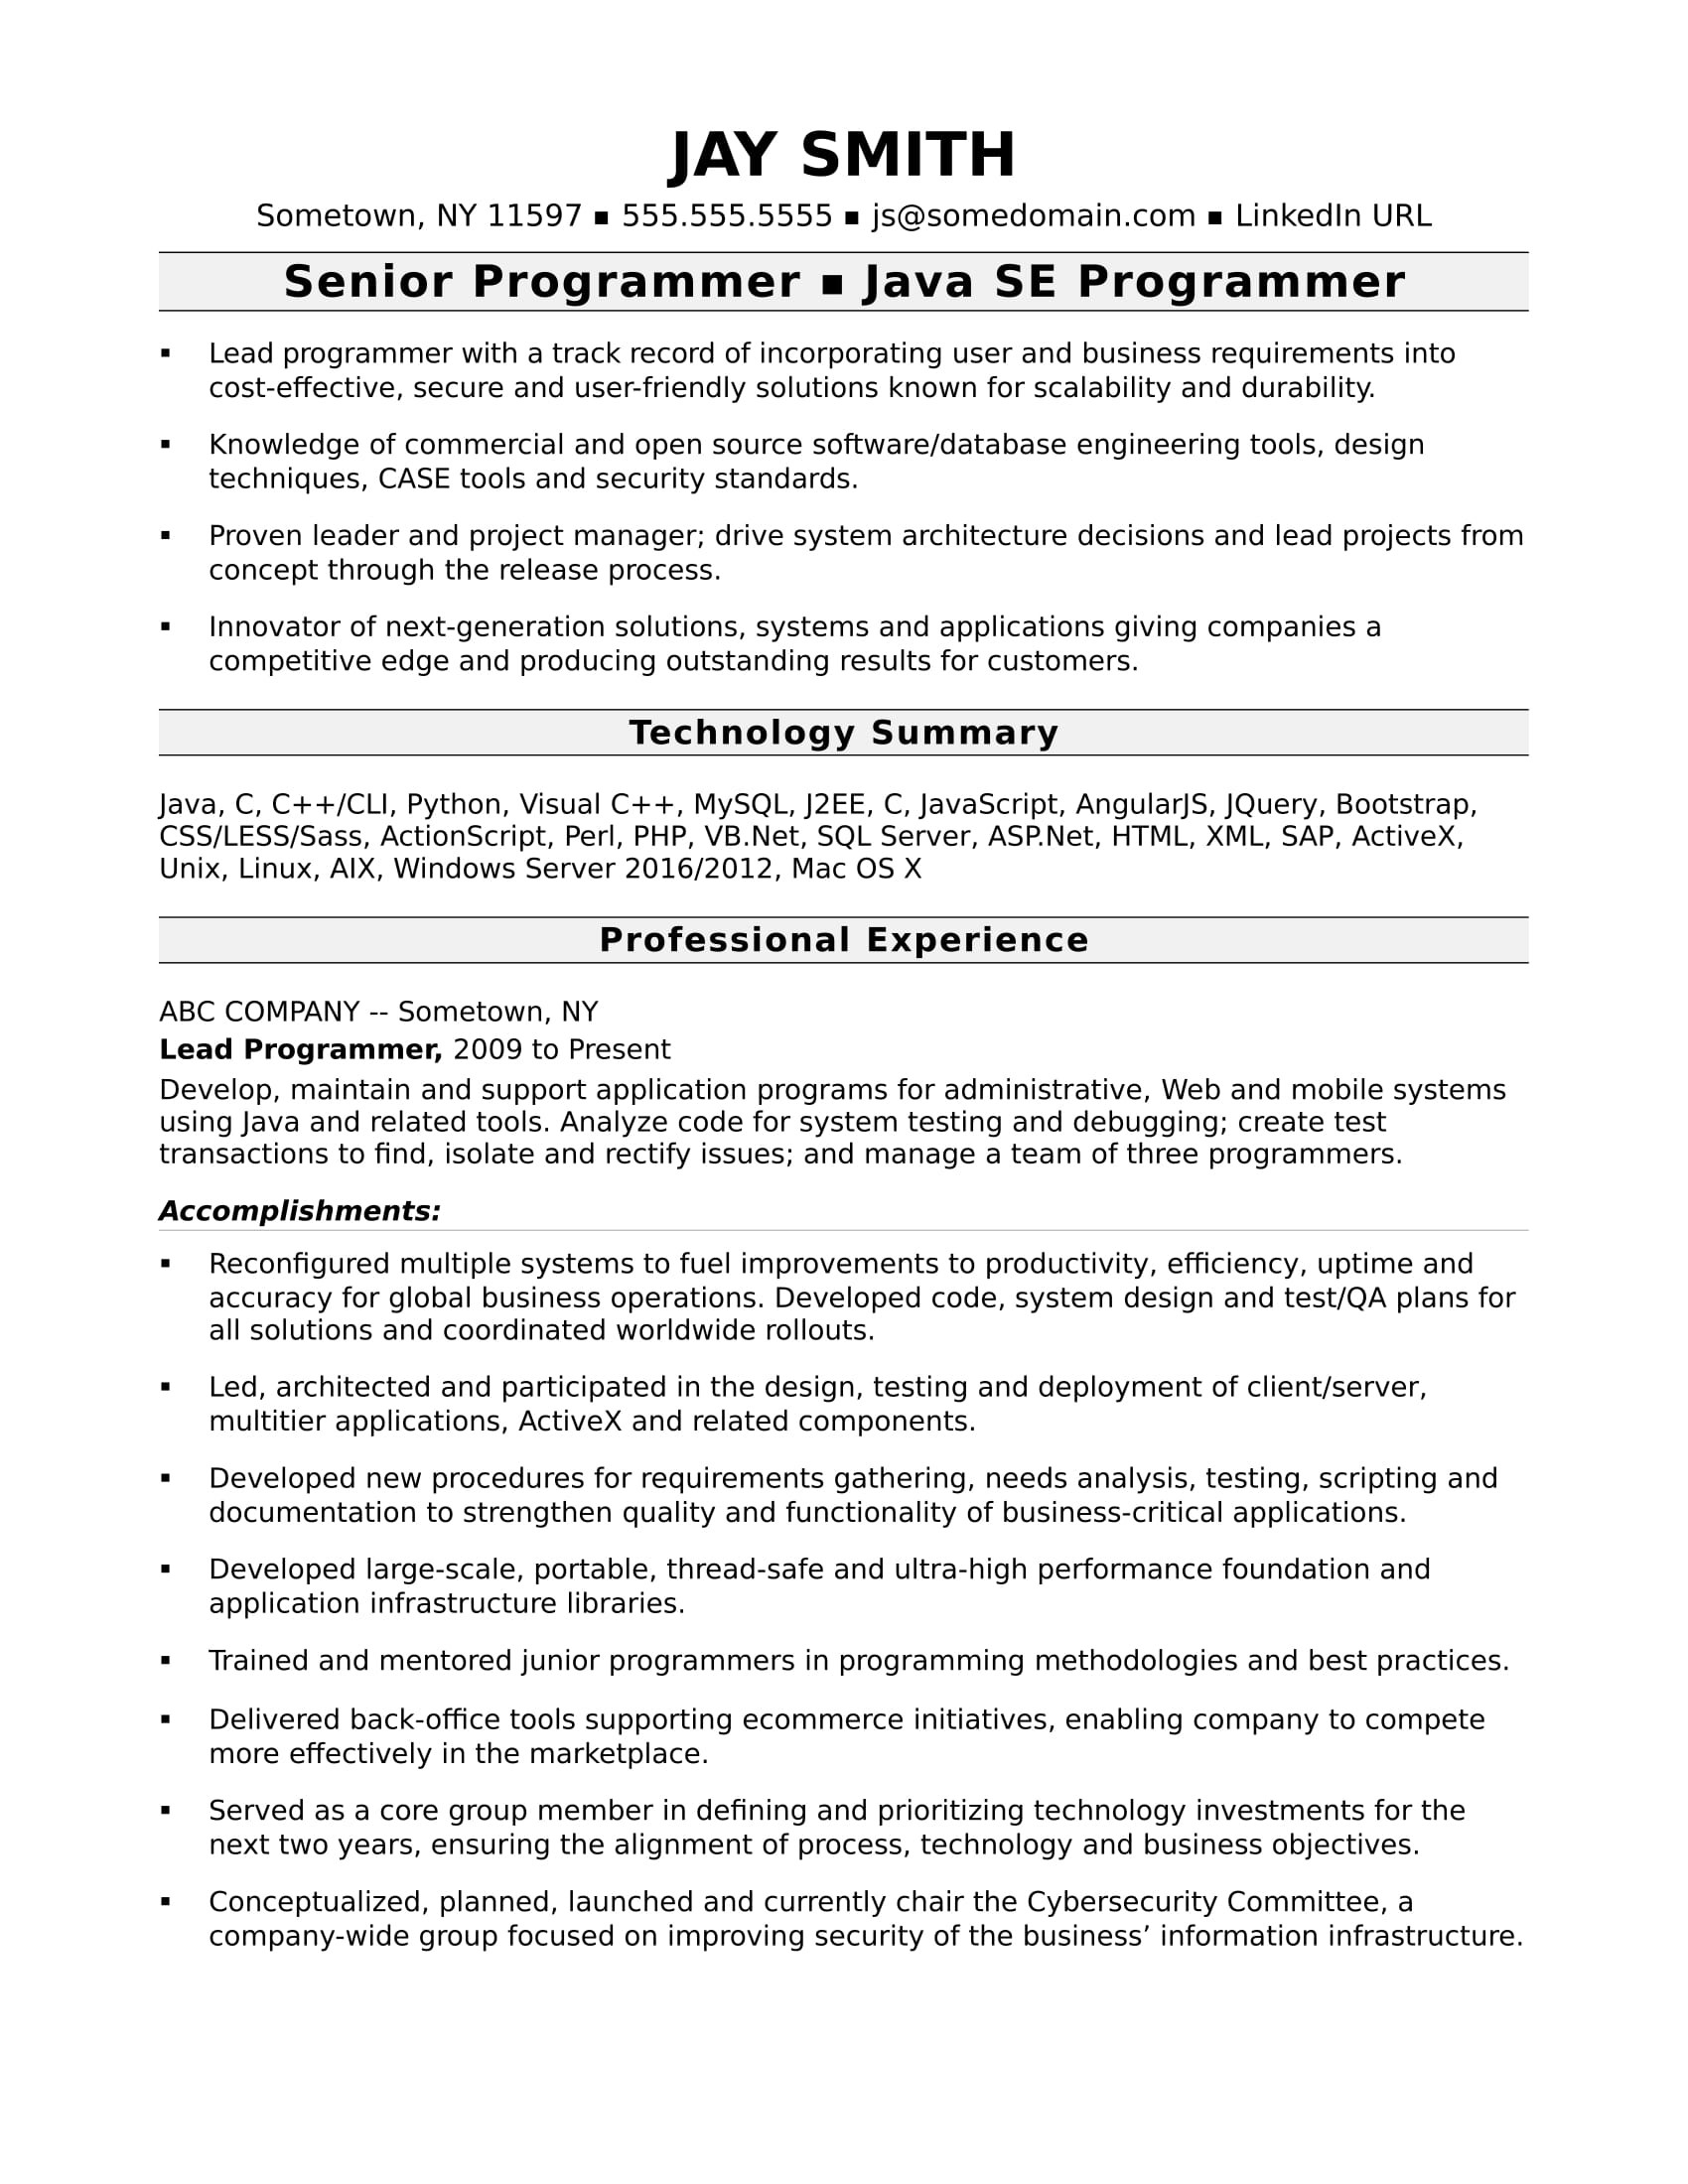 Sample Resume Science Standards Ad Instruction Programmer Resume Template Monster.com